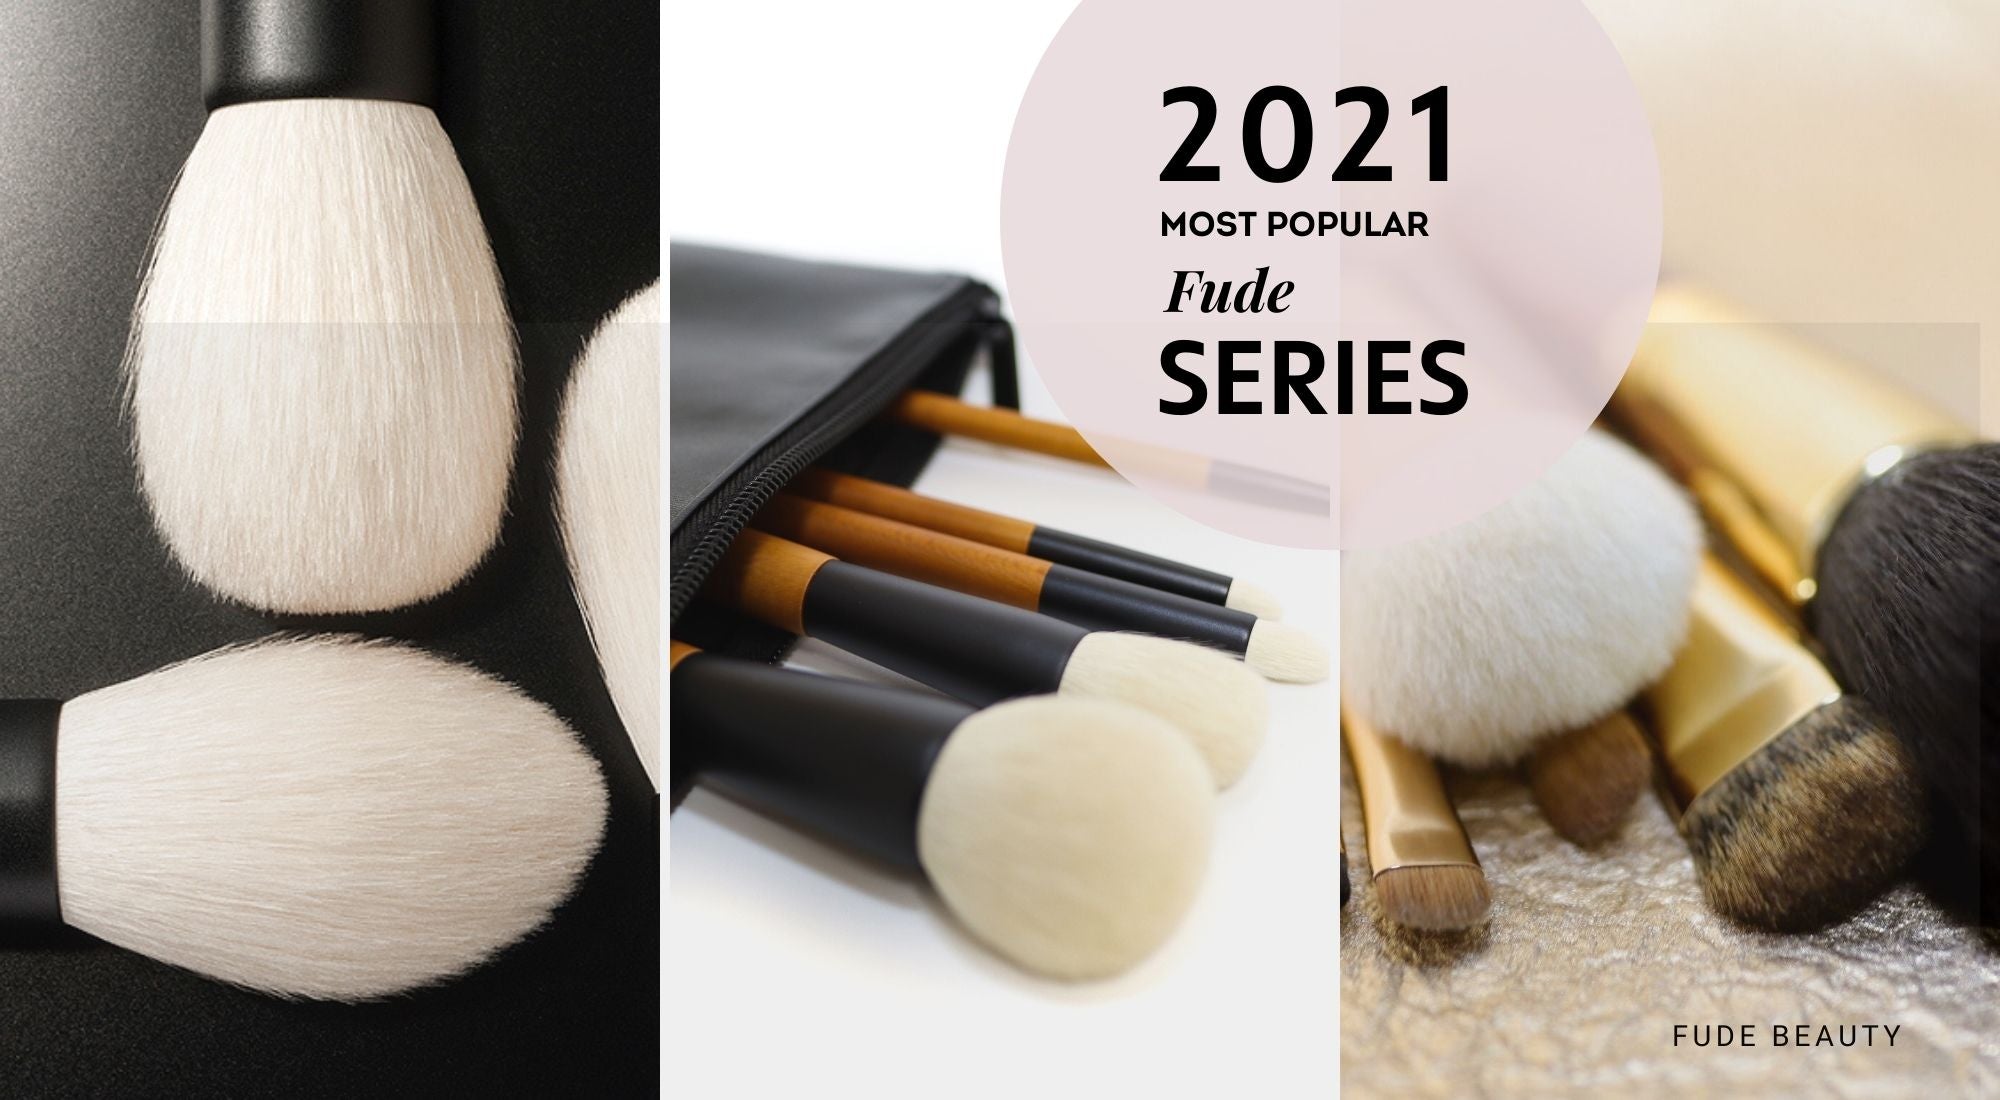 Most Popular Fude Makeup Series of 2021 – Fude Beauty